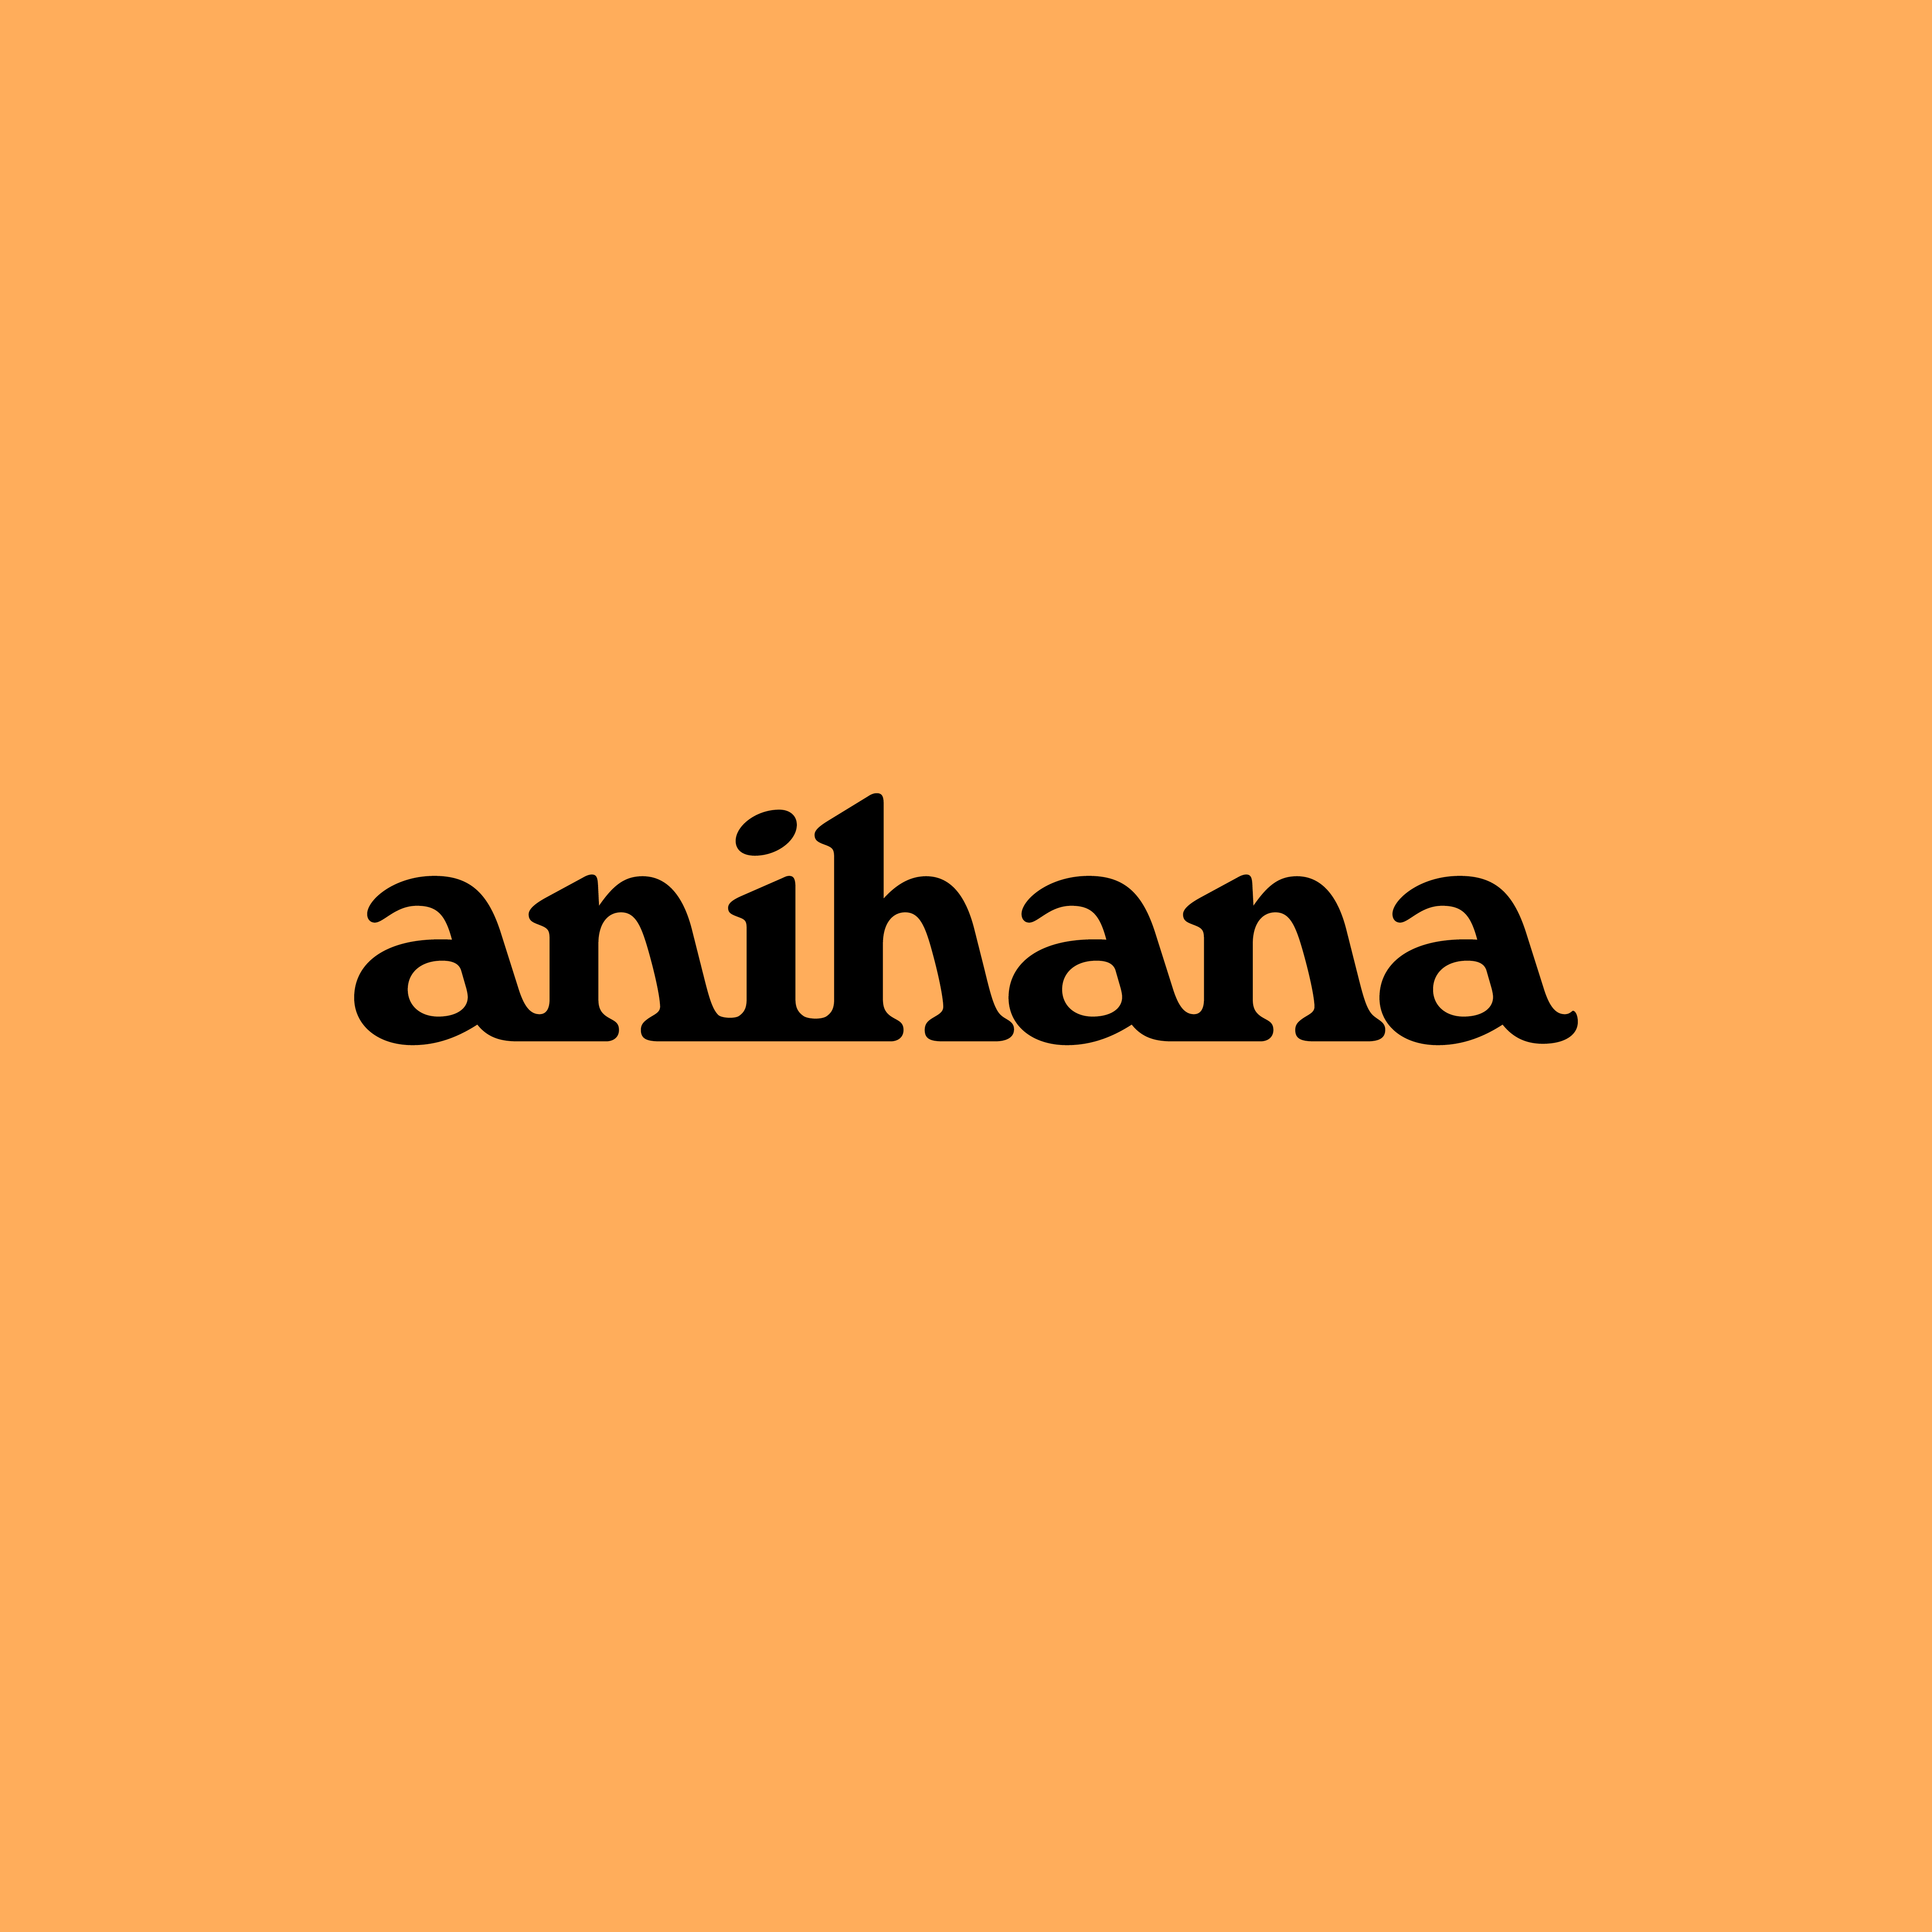 Anihana